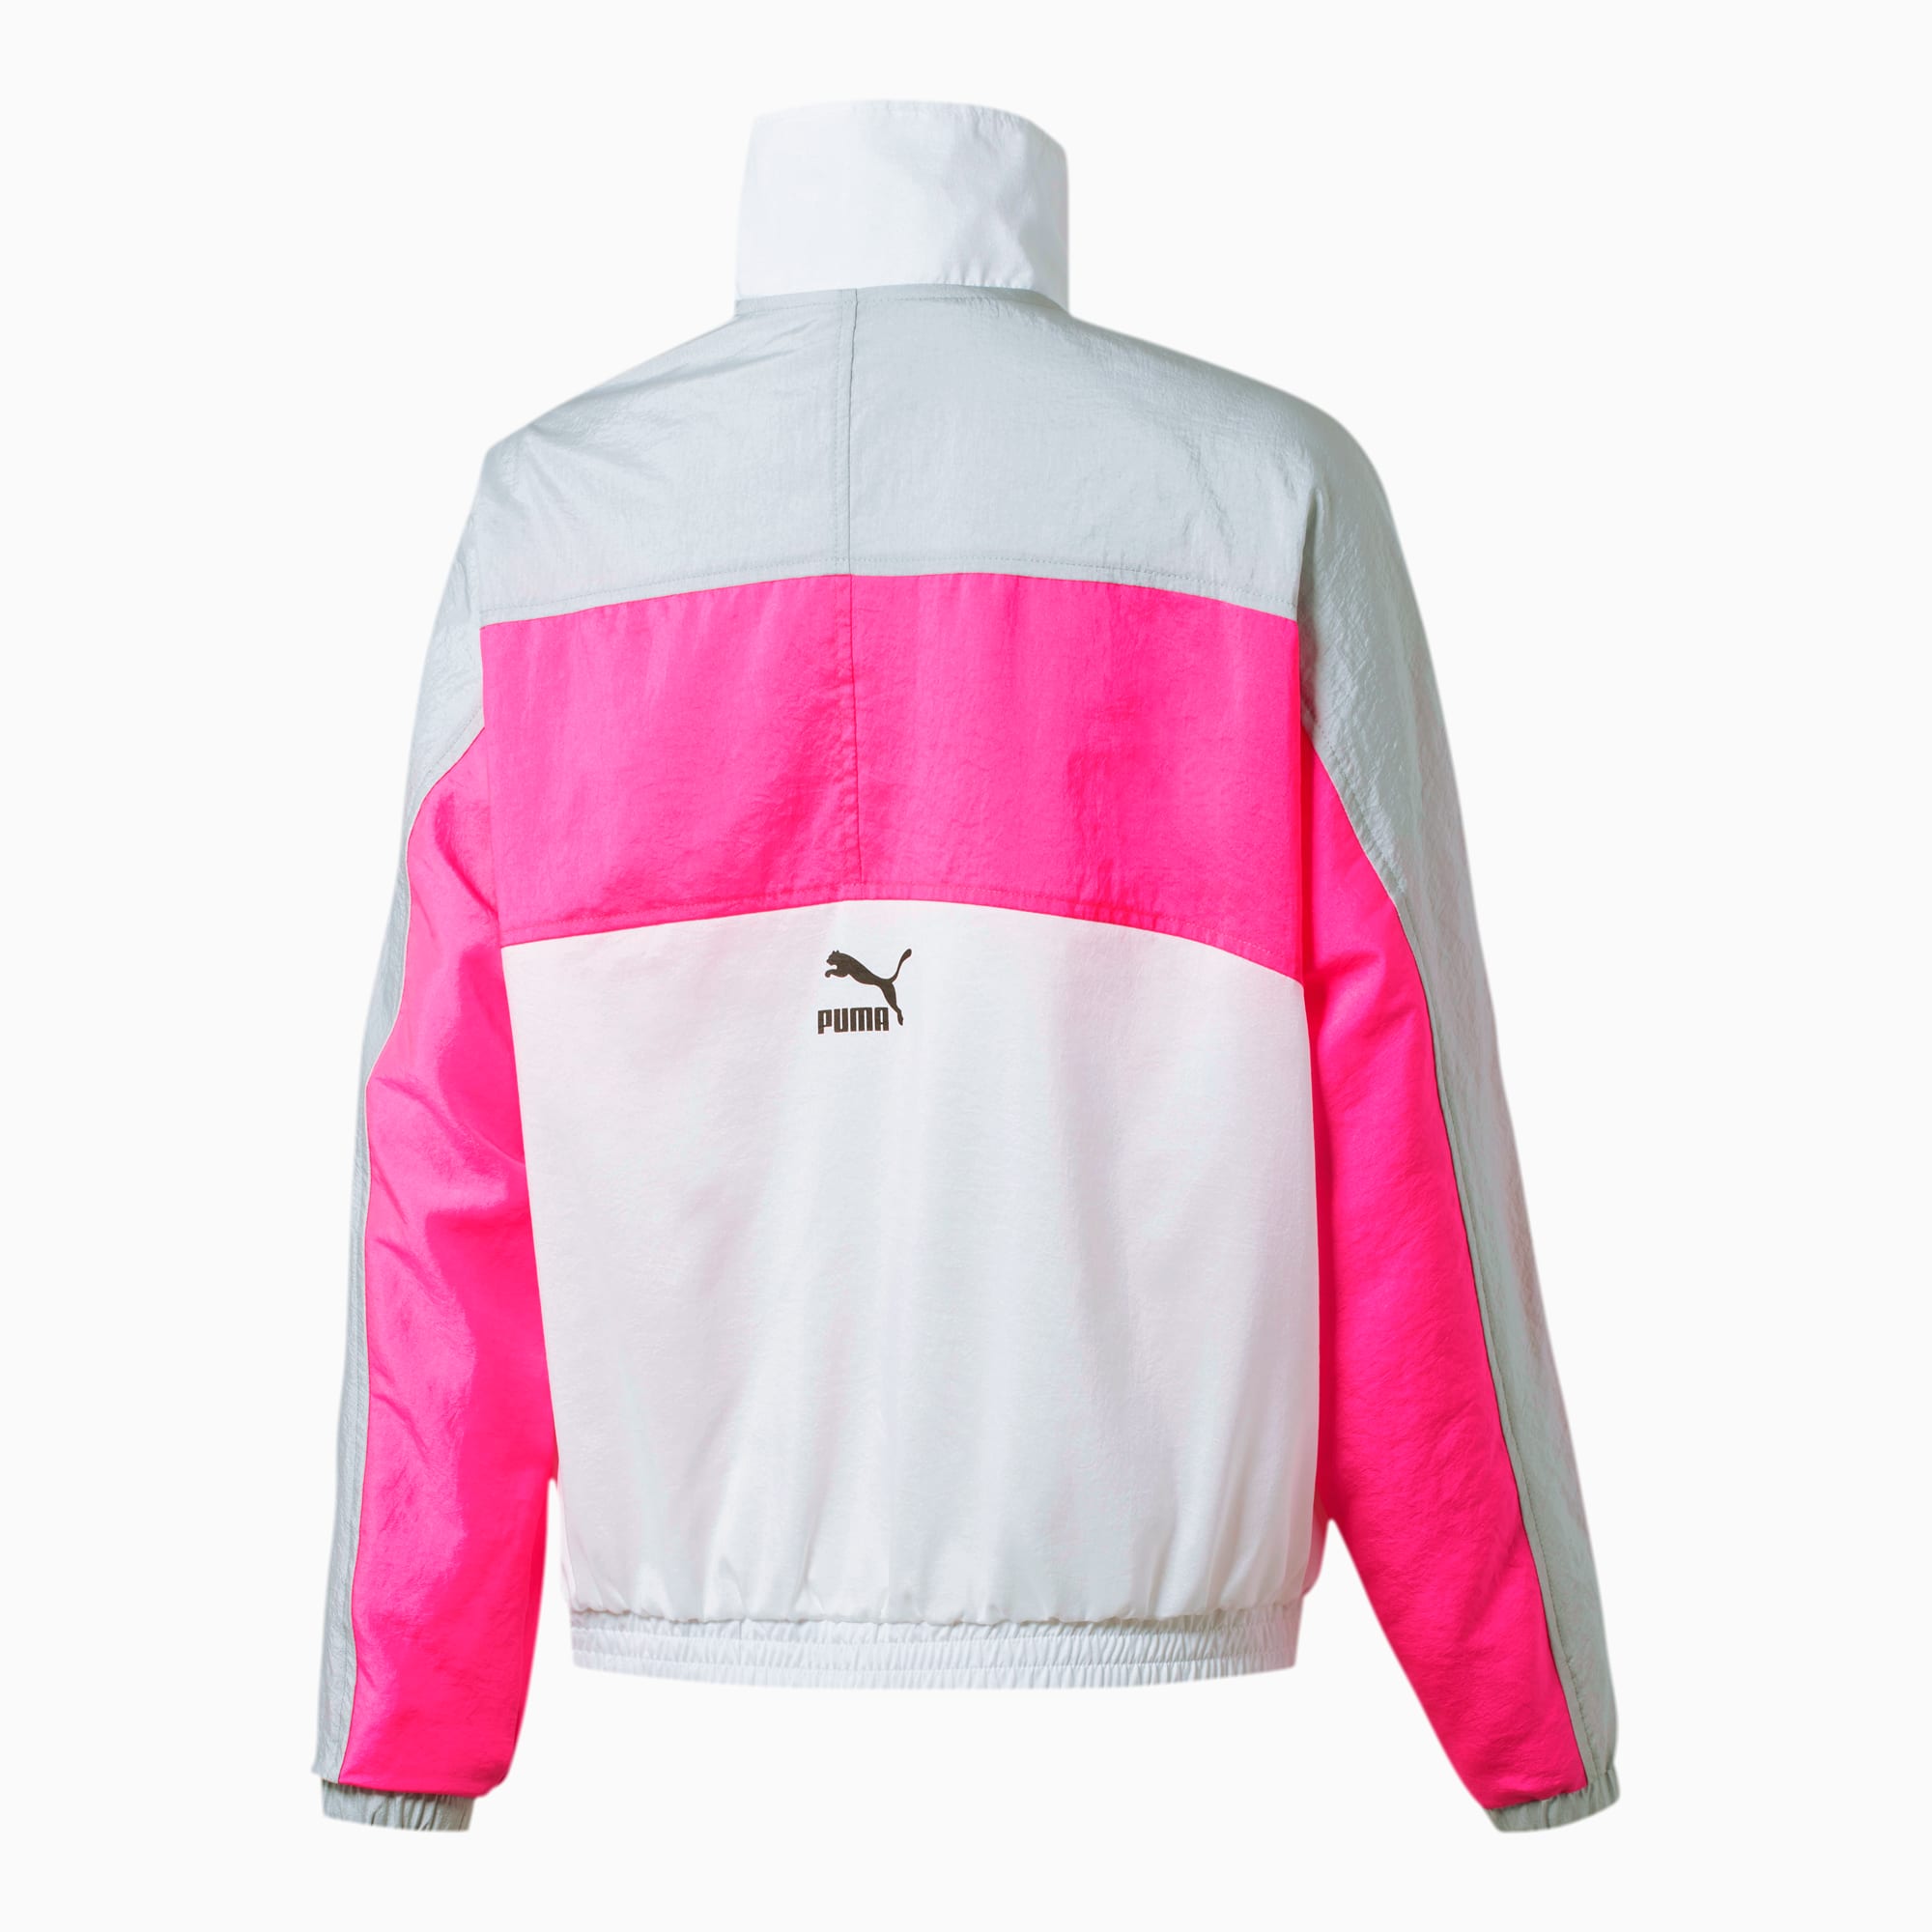 puma retro women's track jacket